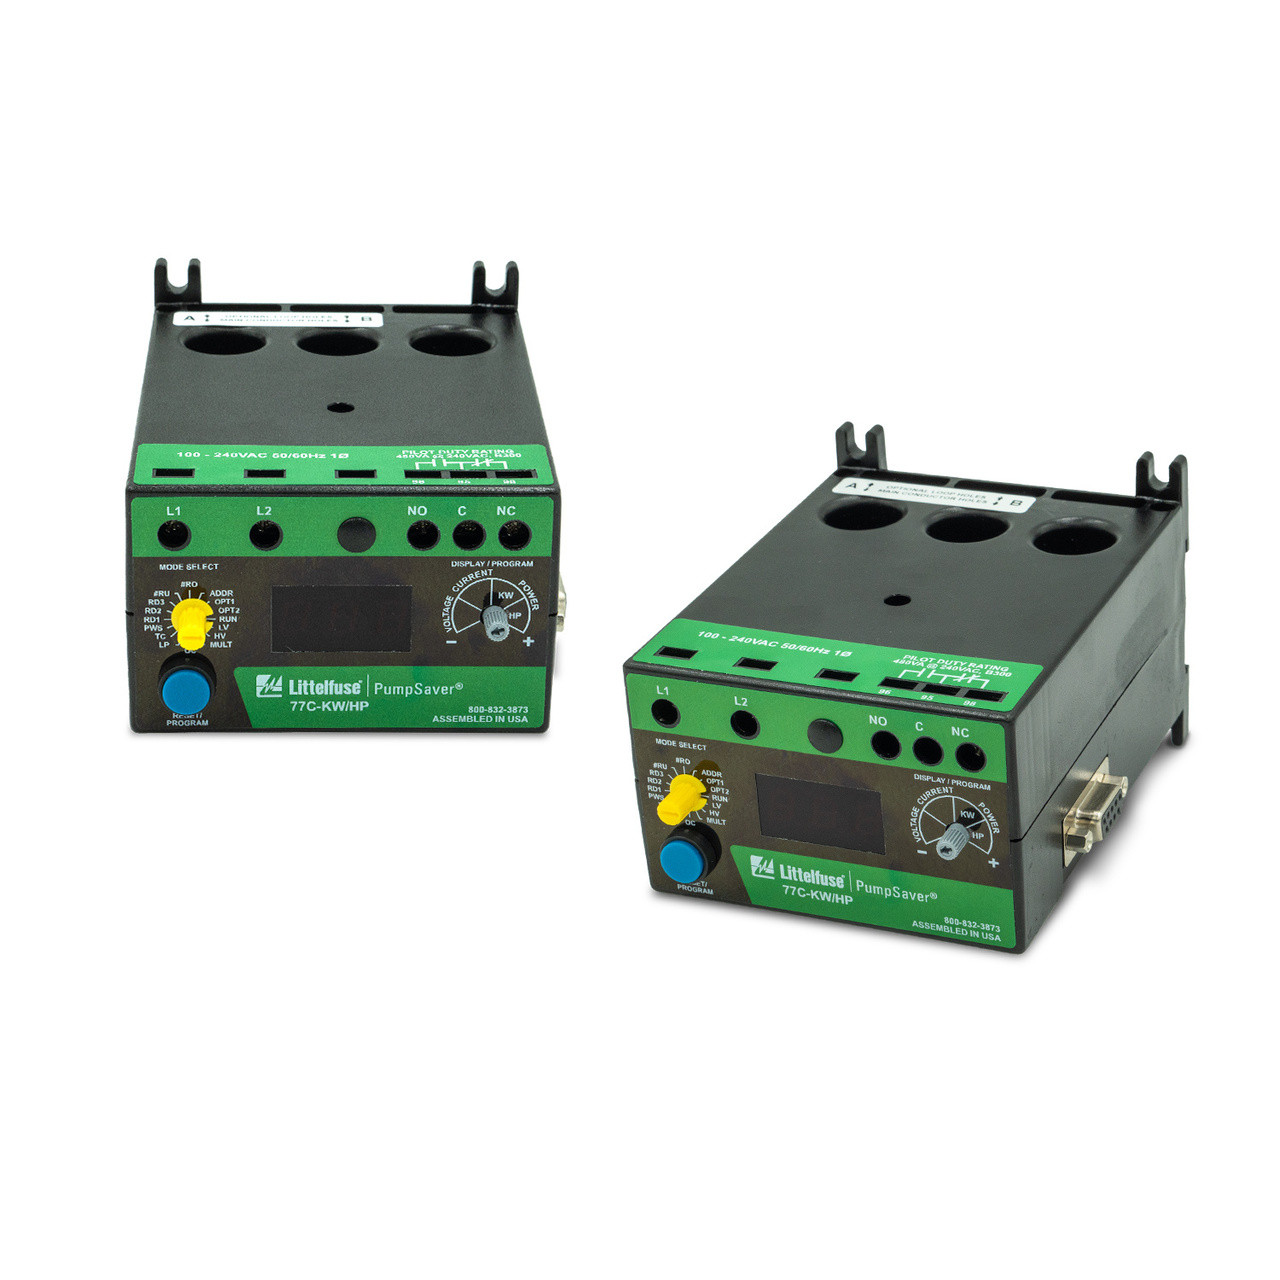 Littelfuse-Symcom 77C-LR-KW/HP Power Monitors